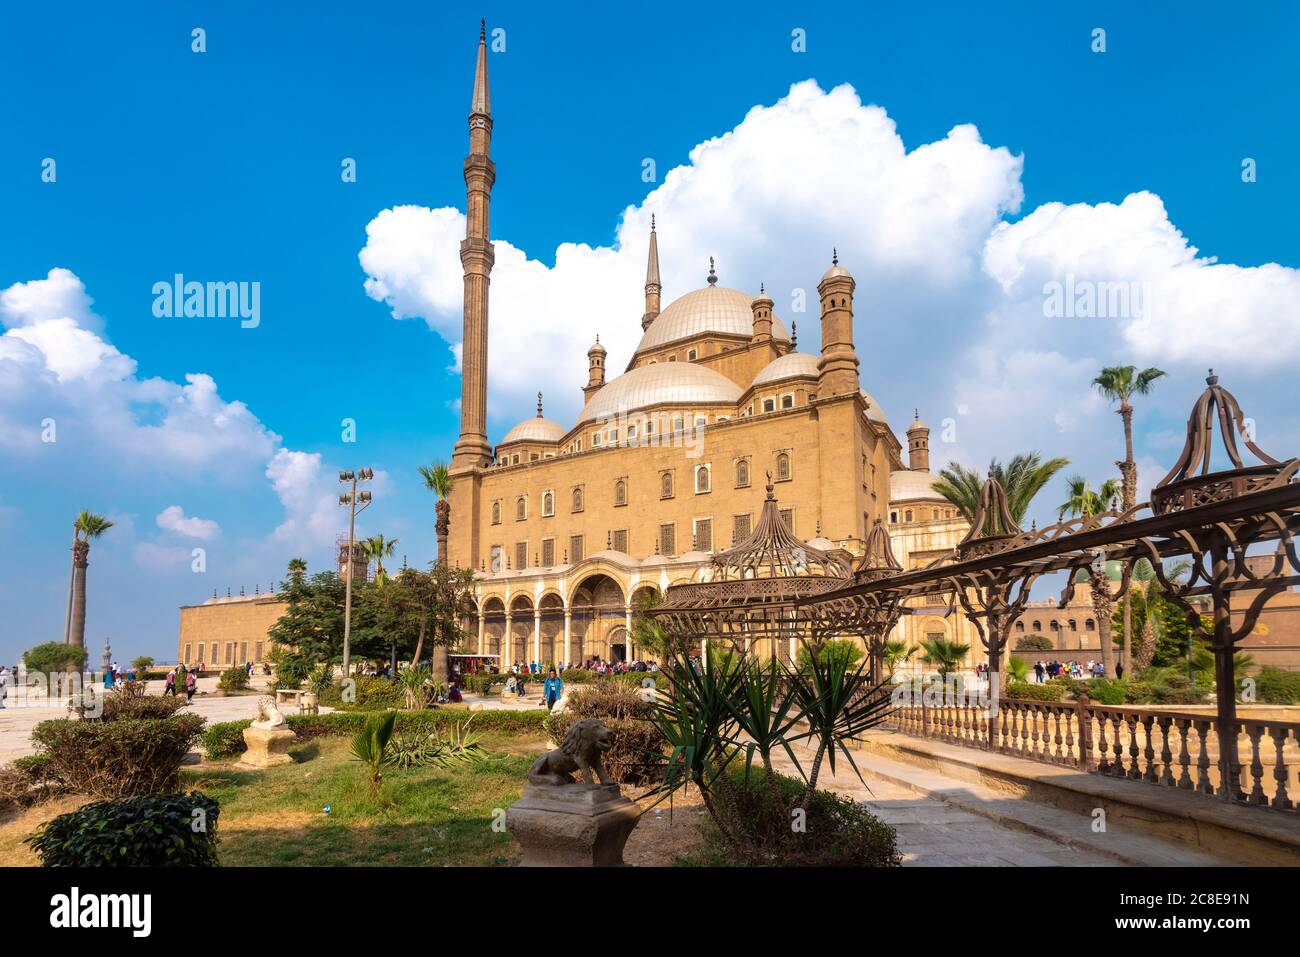 Ägypten, Kairo, Moschee von Mohamed Ali Pascha in der Zitadelle von SaladinMoschee von Mohamed Ali Pascha in der Zitadelle von Saladin Stockfoto